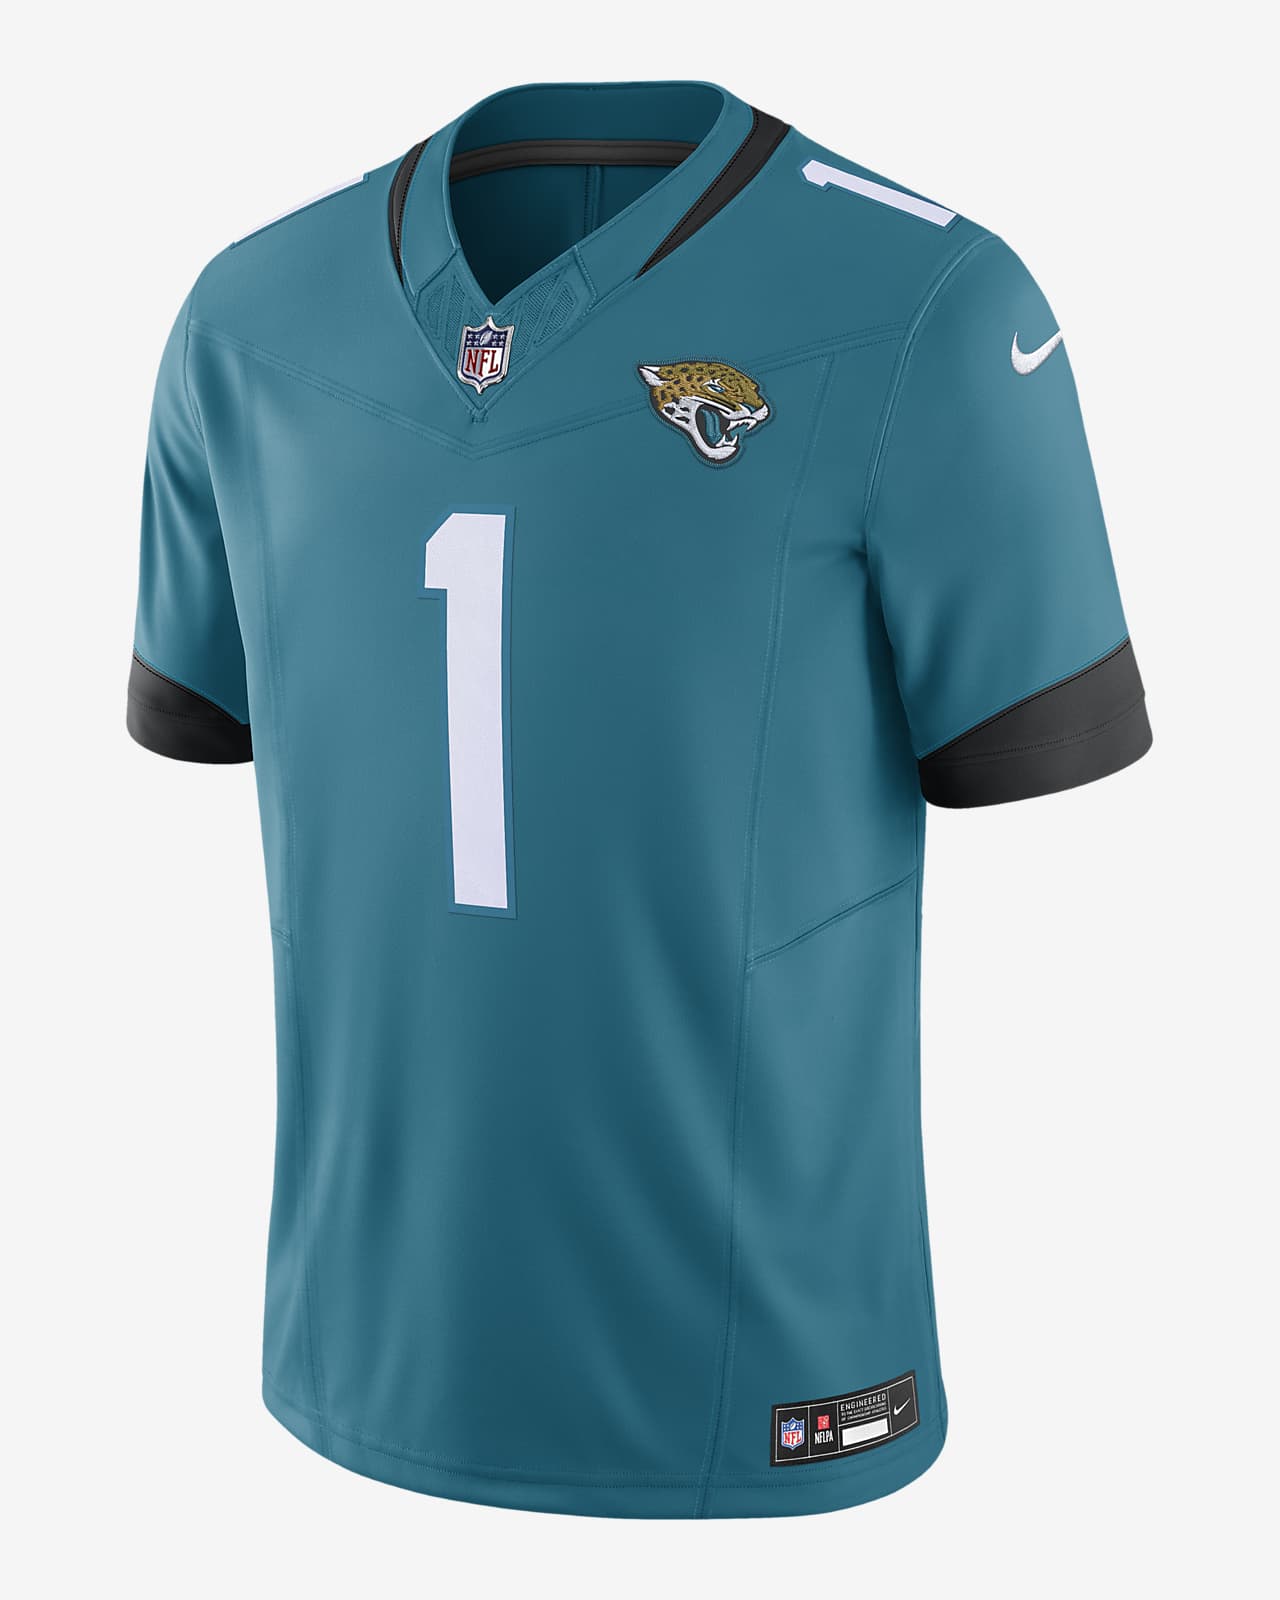 Jersey de fútbol americano Nike Dri-FIT de la NFL Limited para hombre Travis Etienne Jacksonville Jaguars